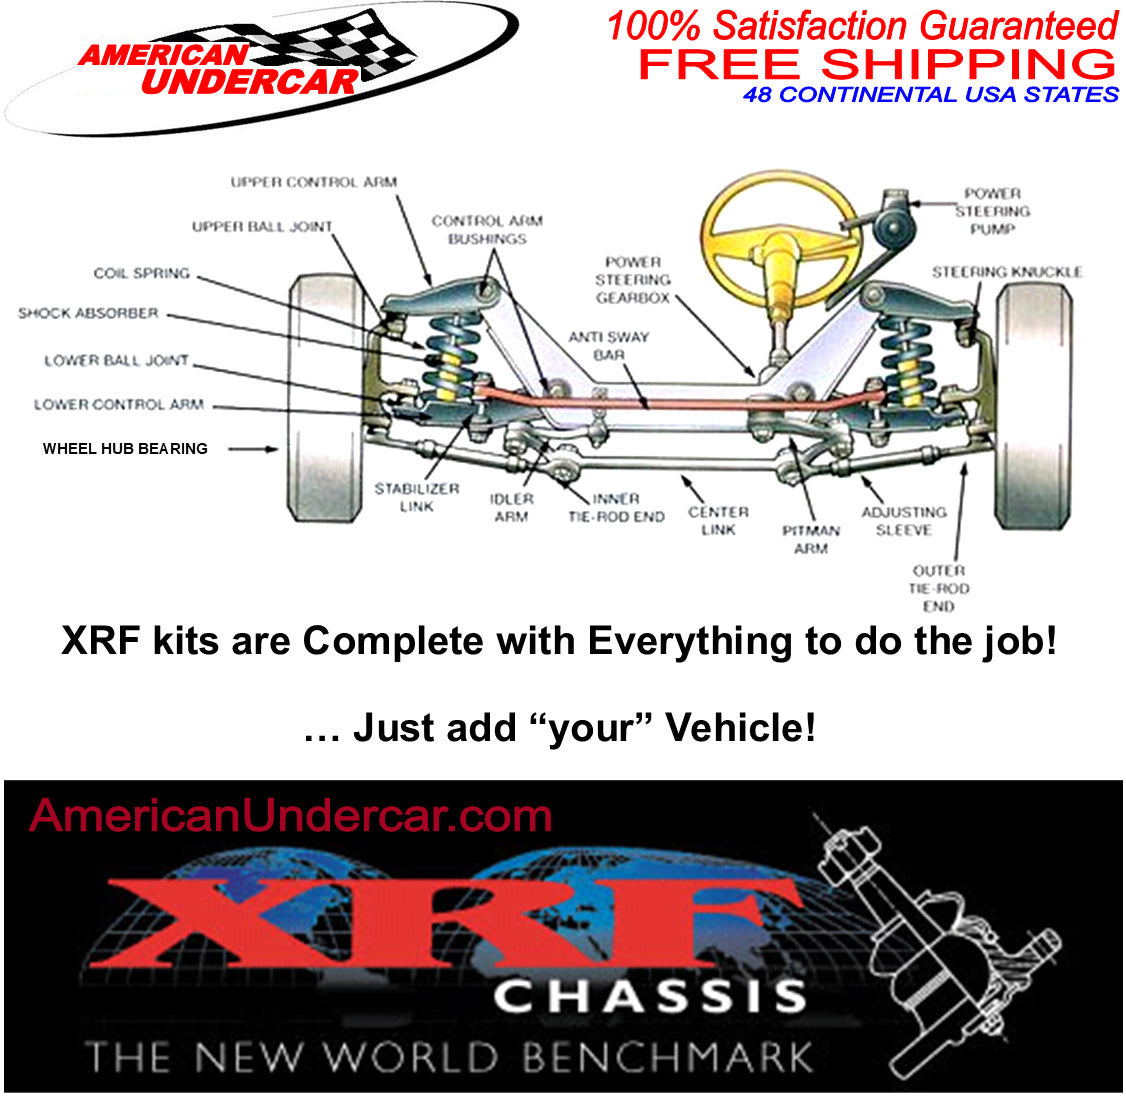 XRF Ball Joint Tie Rod Drag Link Sleeve Steering Kit for 1994-1997 Dodge Ram 2500 4x4, Dana 44